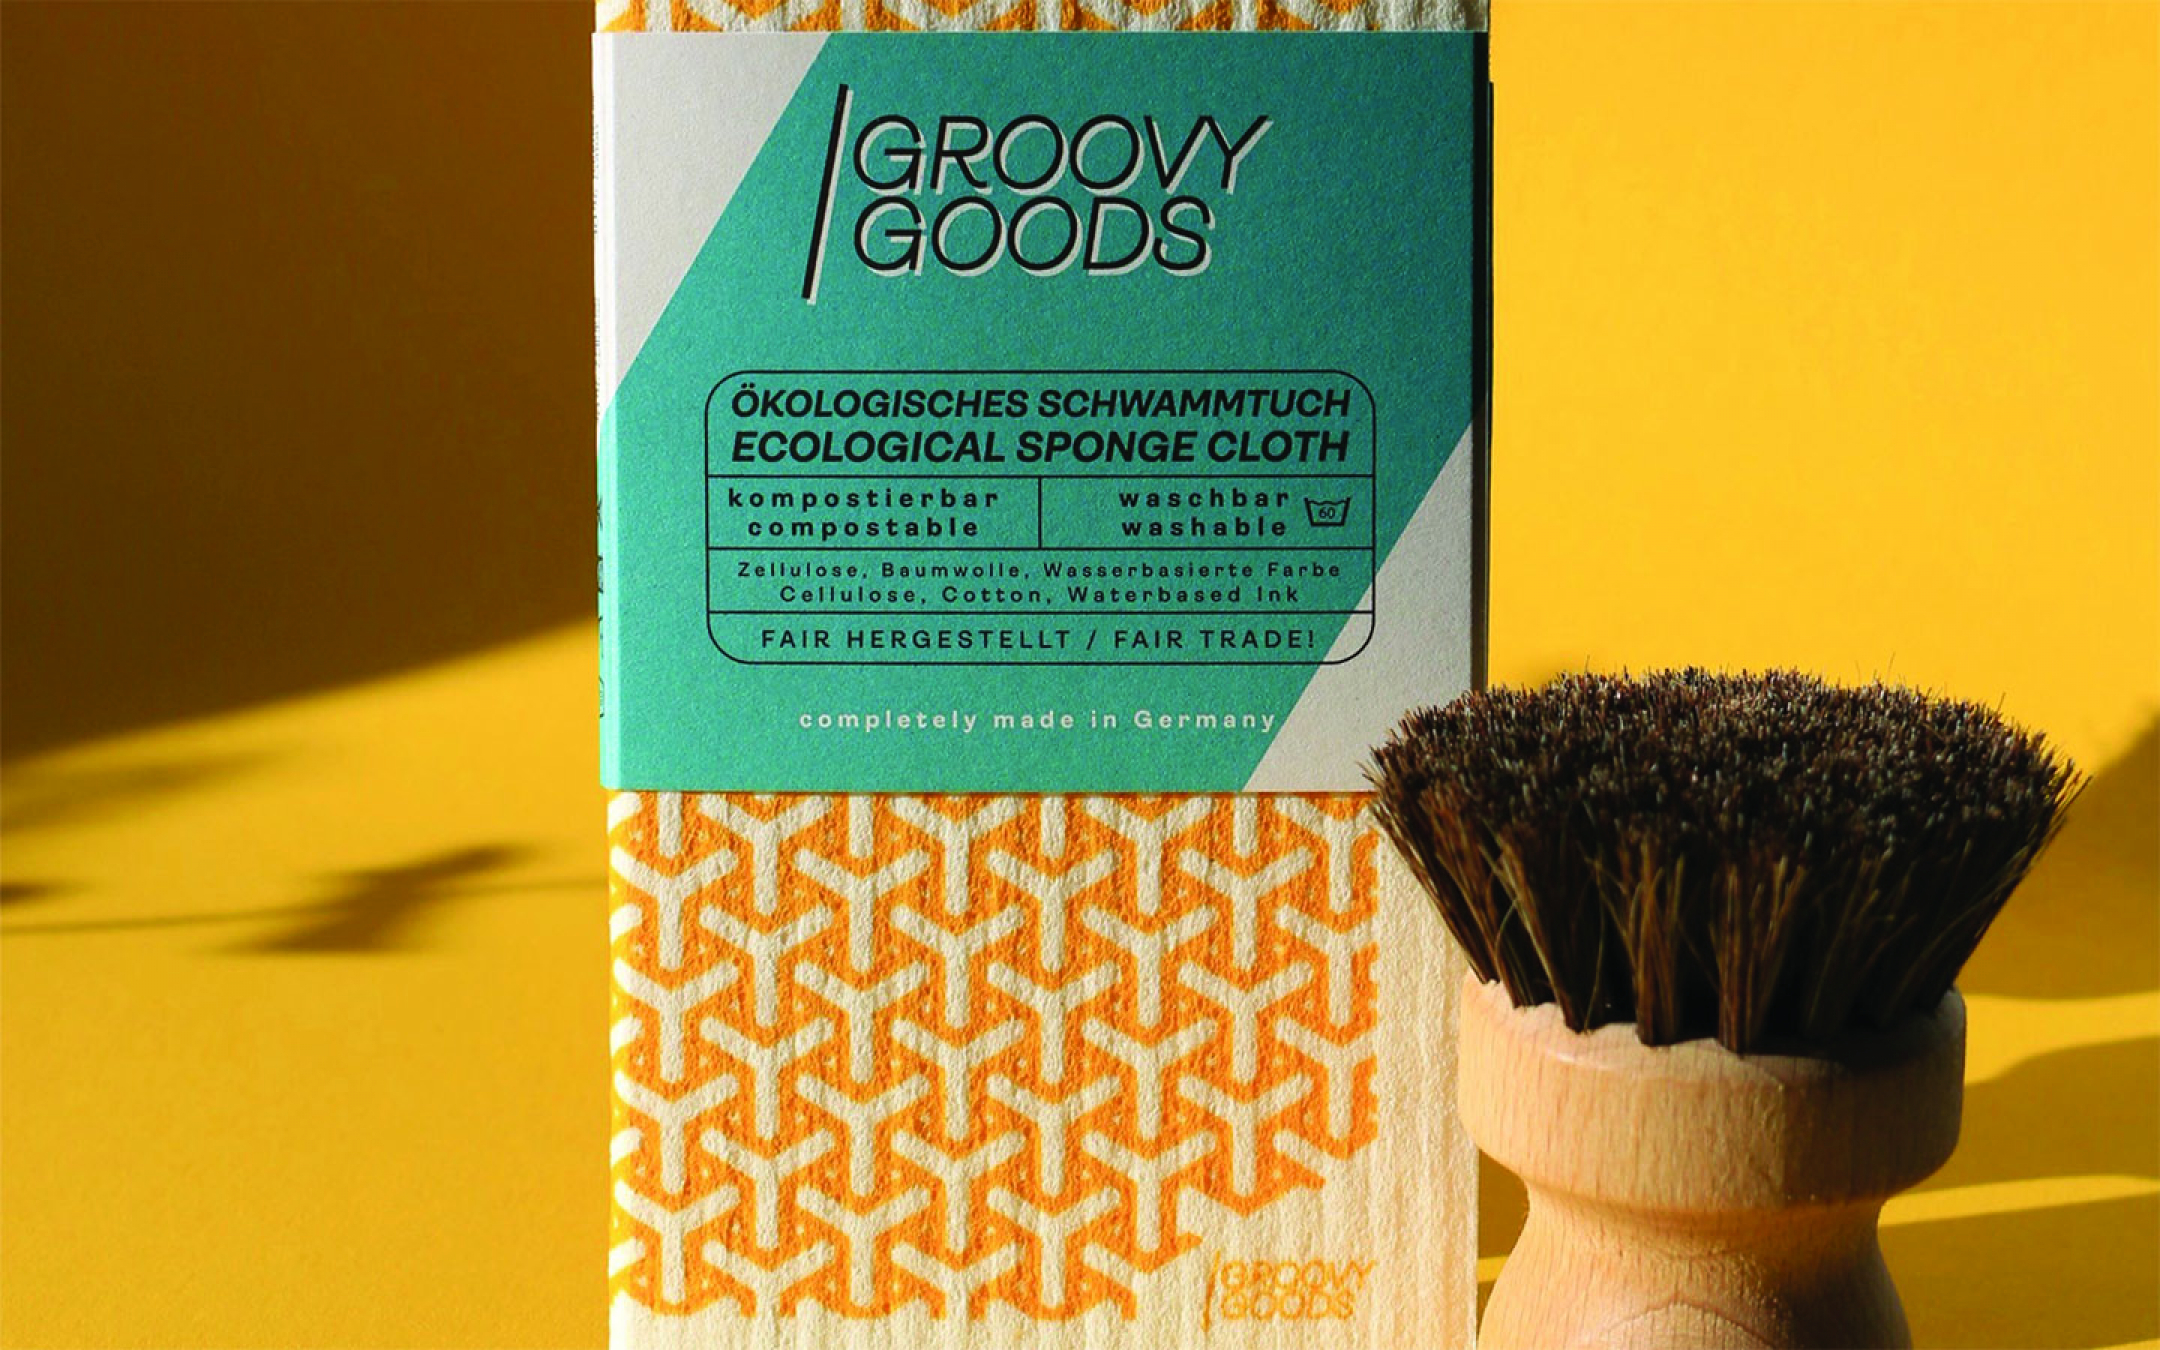 Ecological sponge cloth